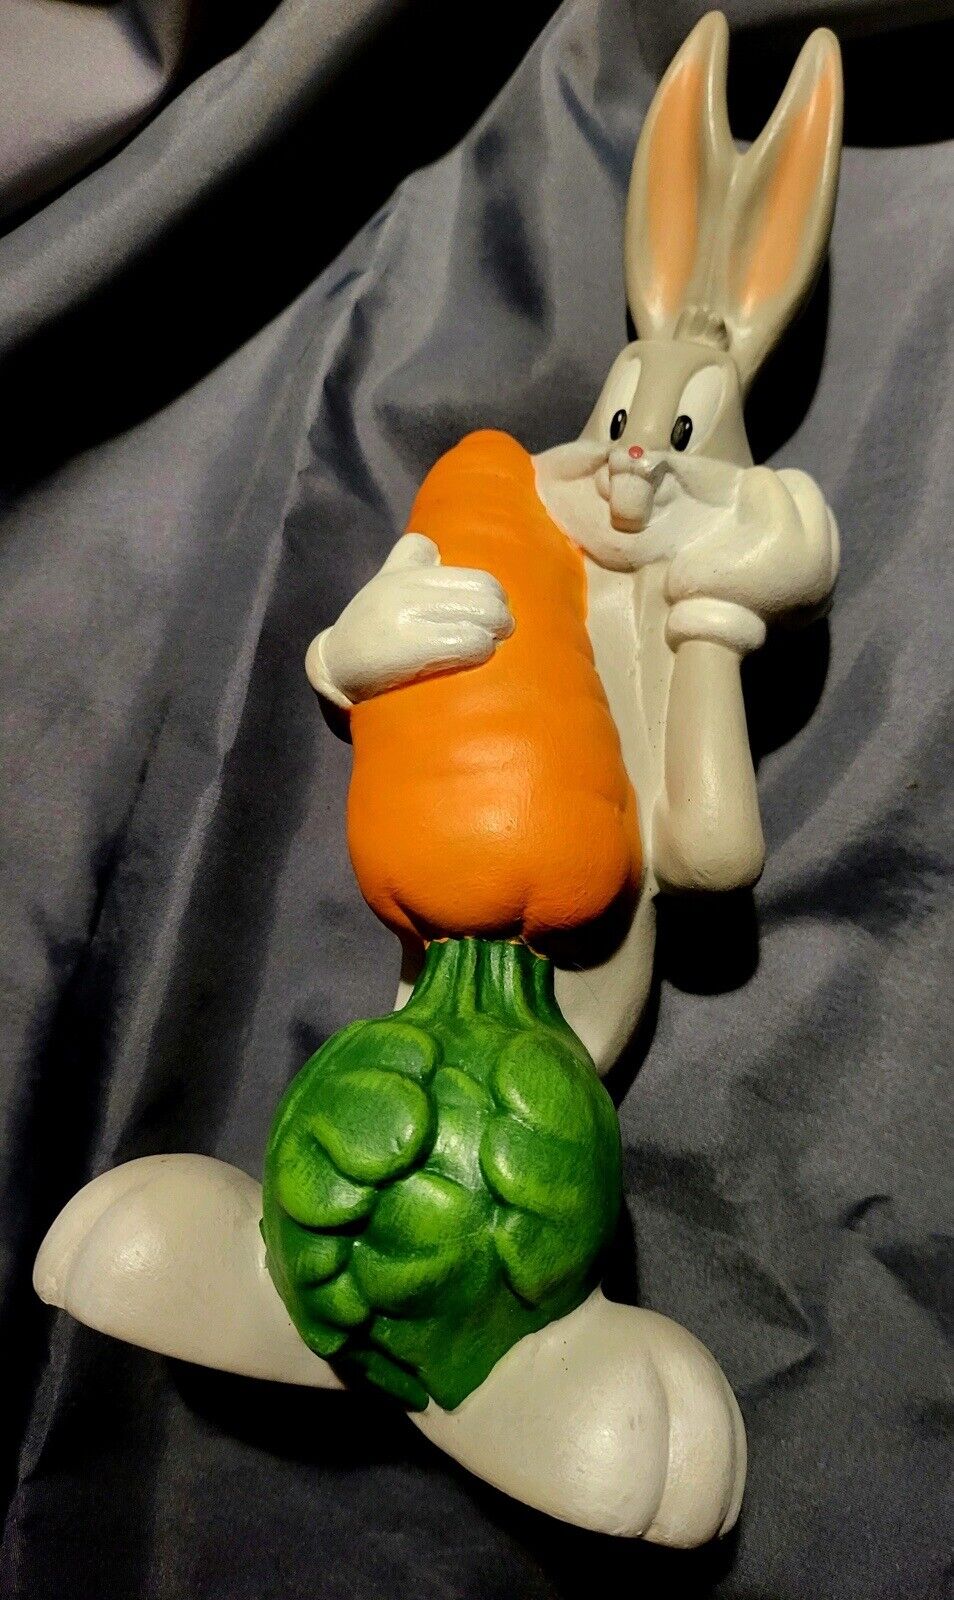 Vintage Warner Bros. Bugs Bunny Ceramic Figurine